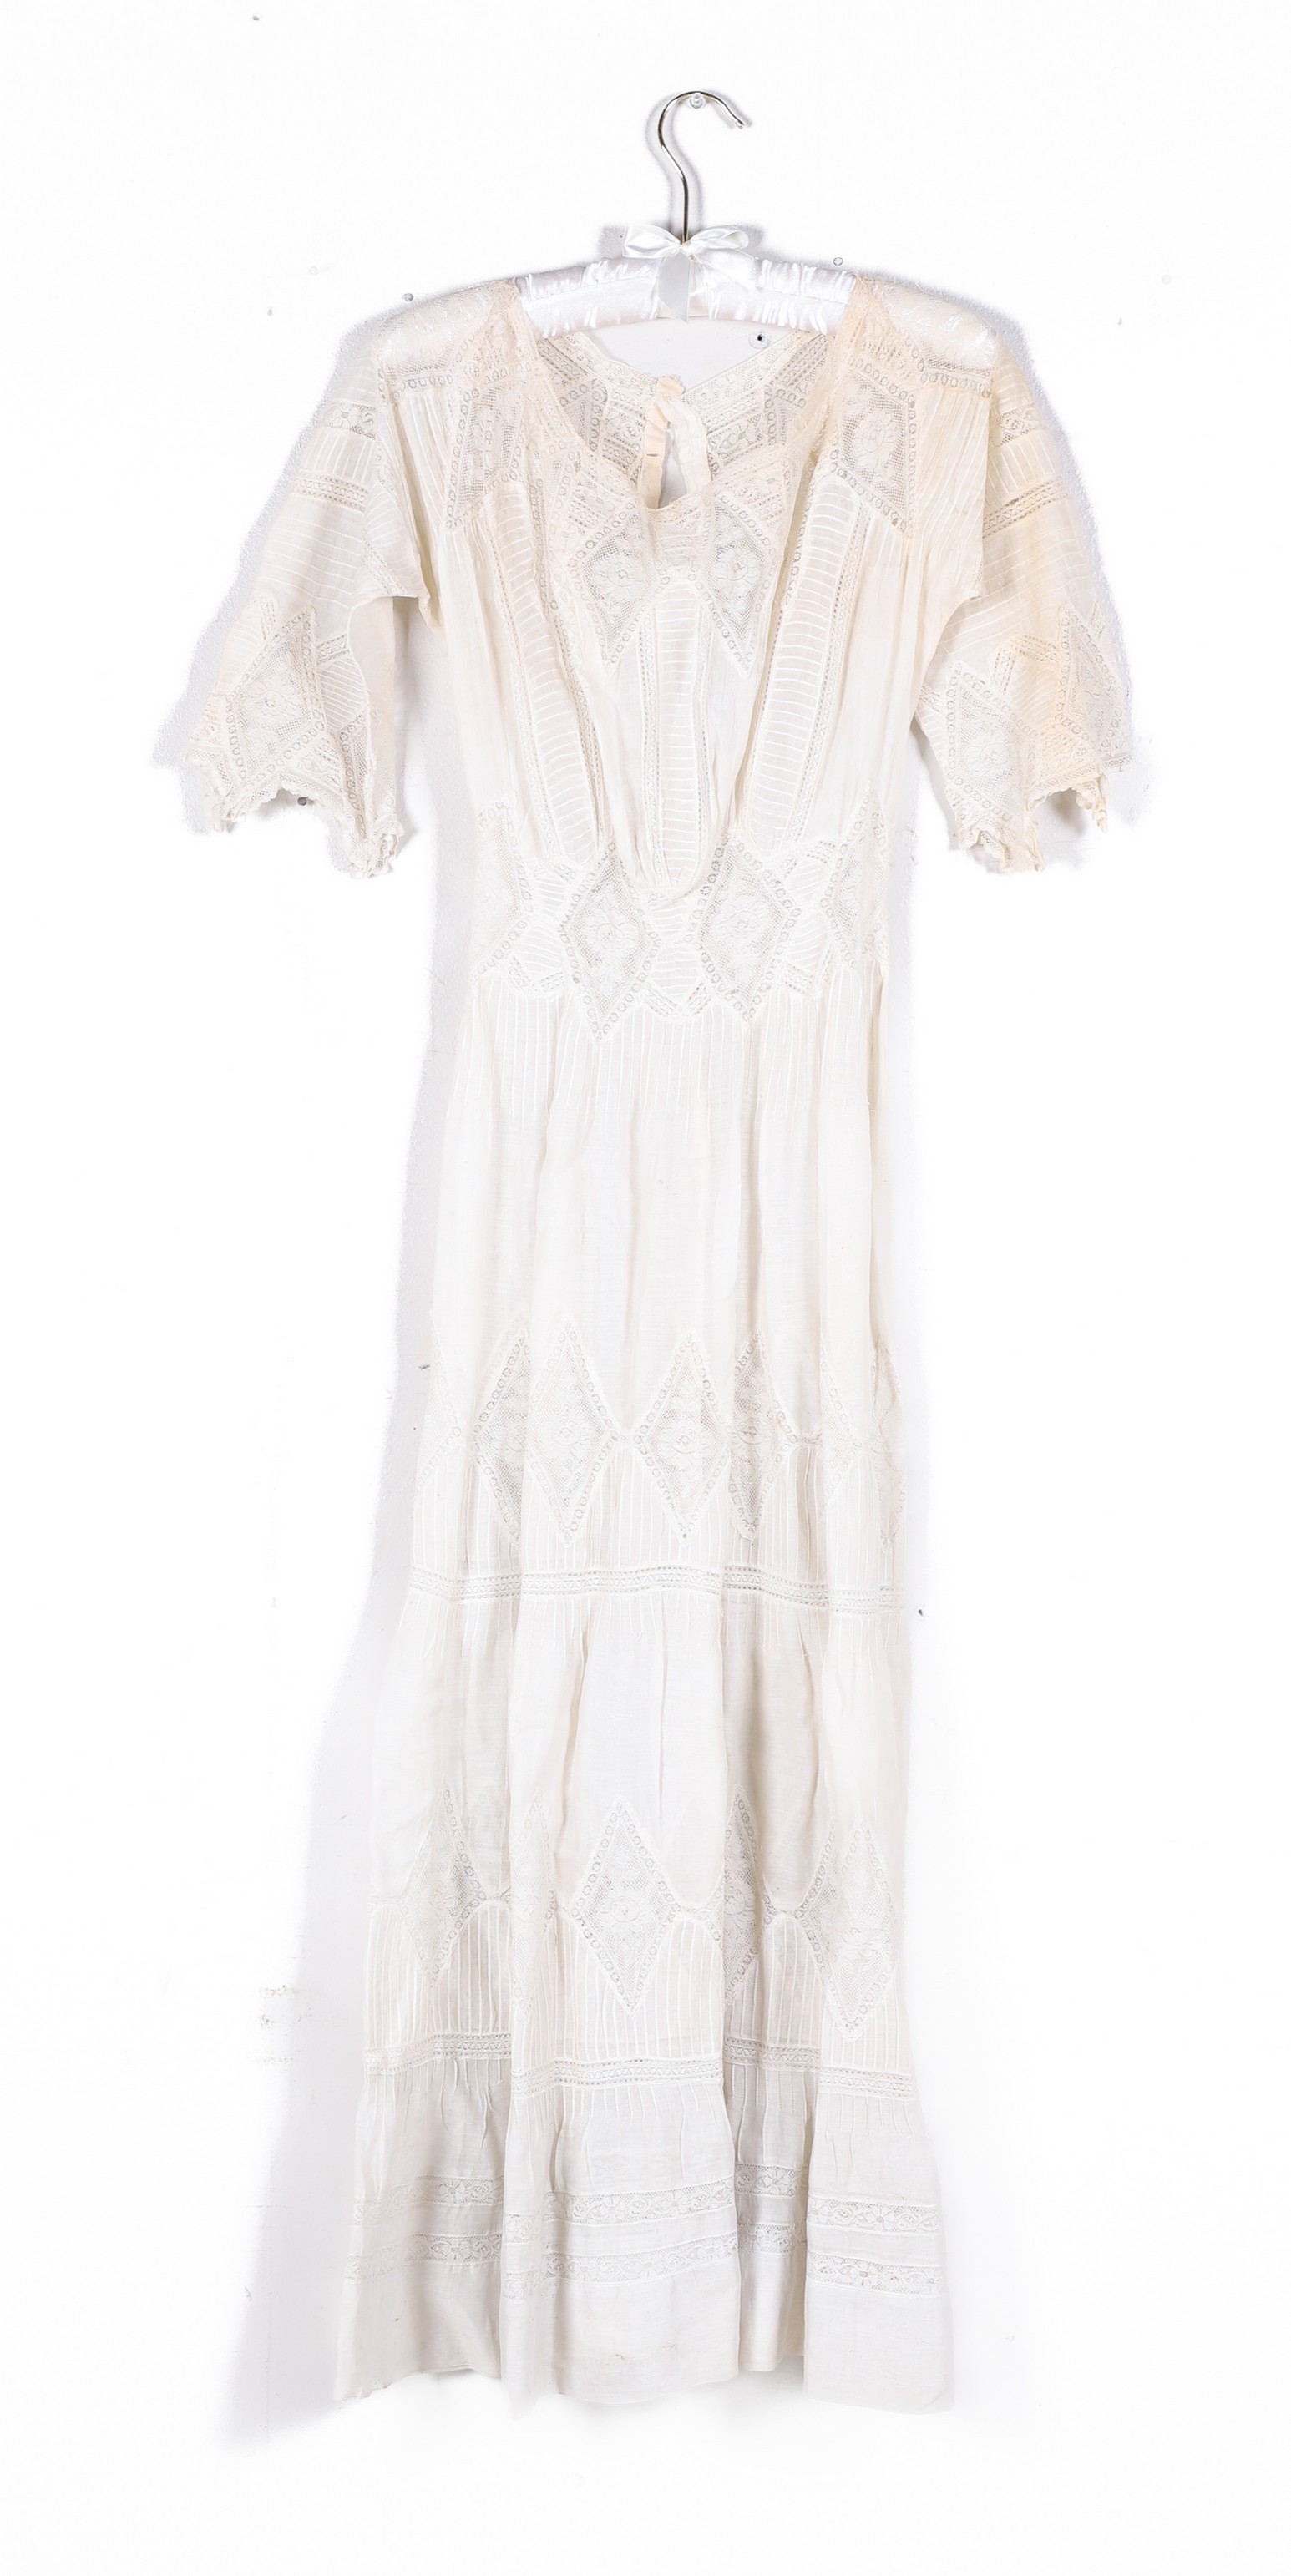 1900 Lace openwork dress, heavily